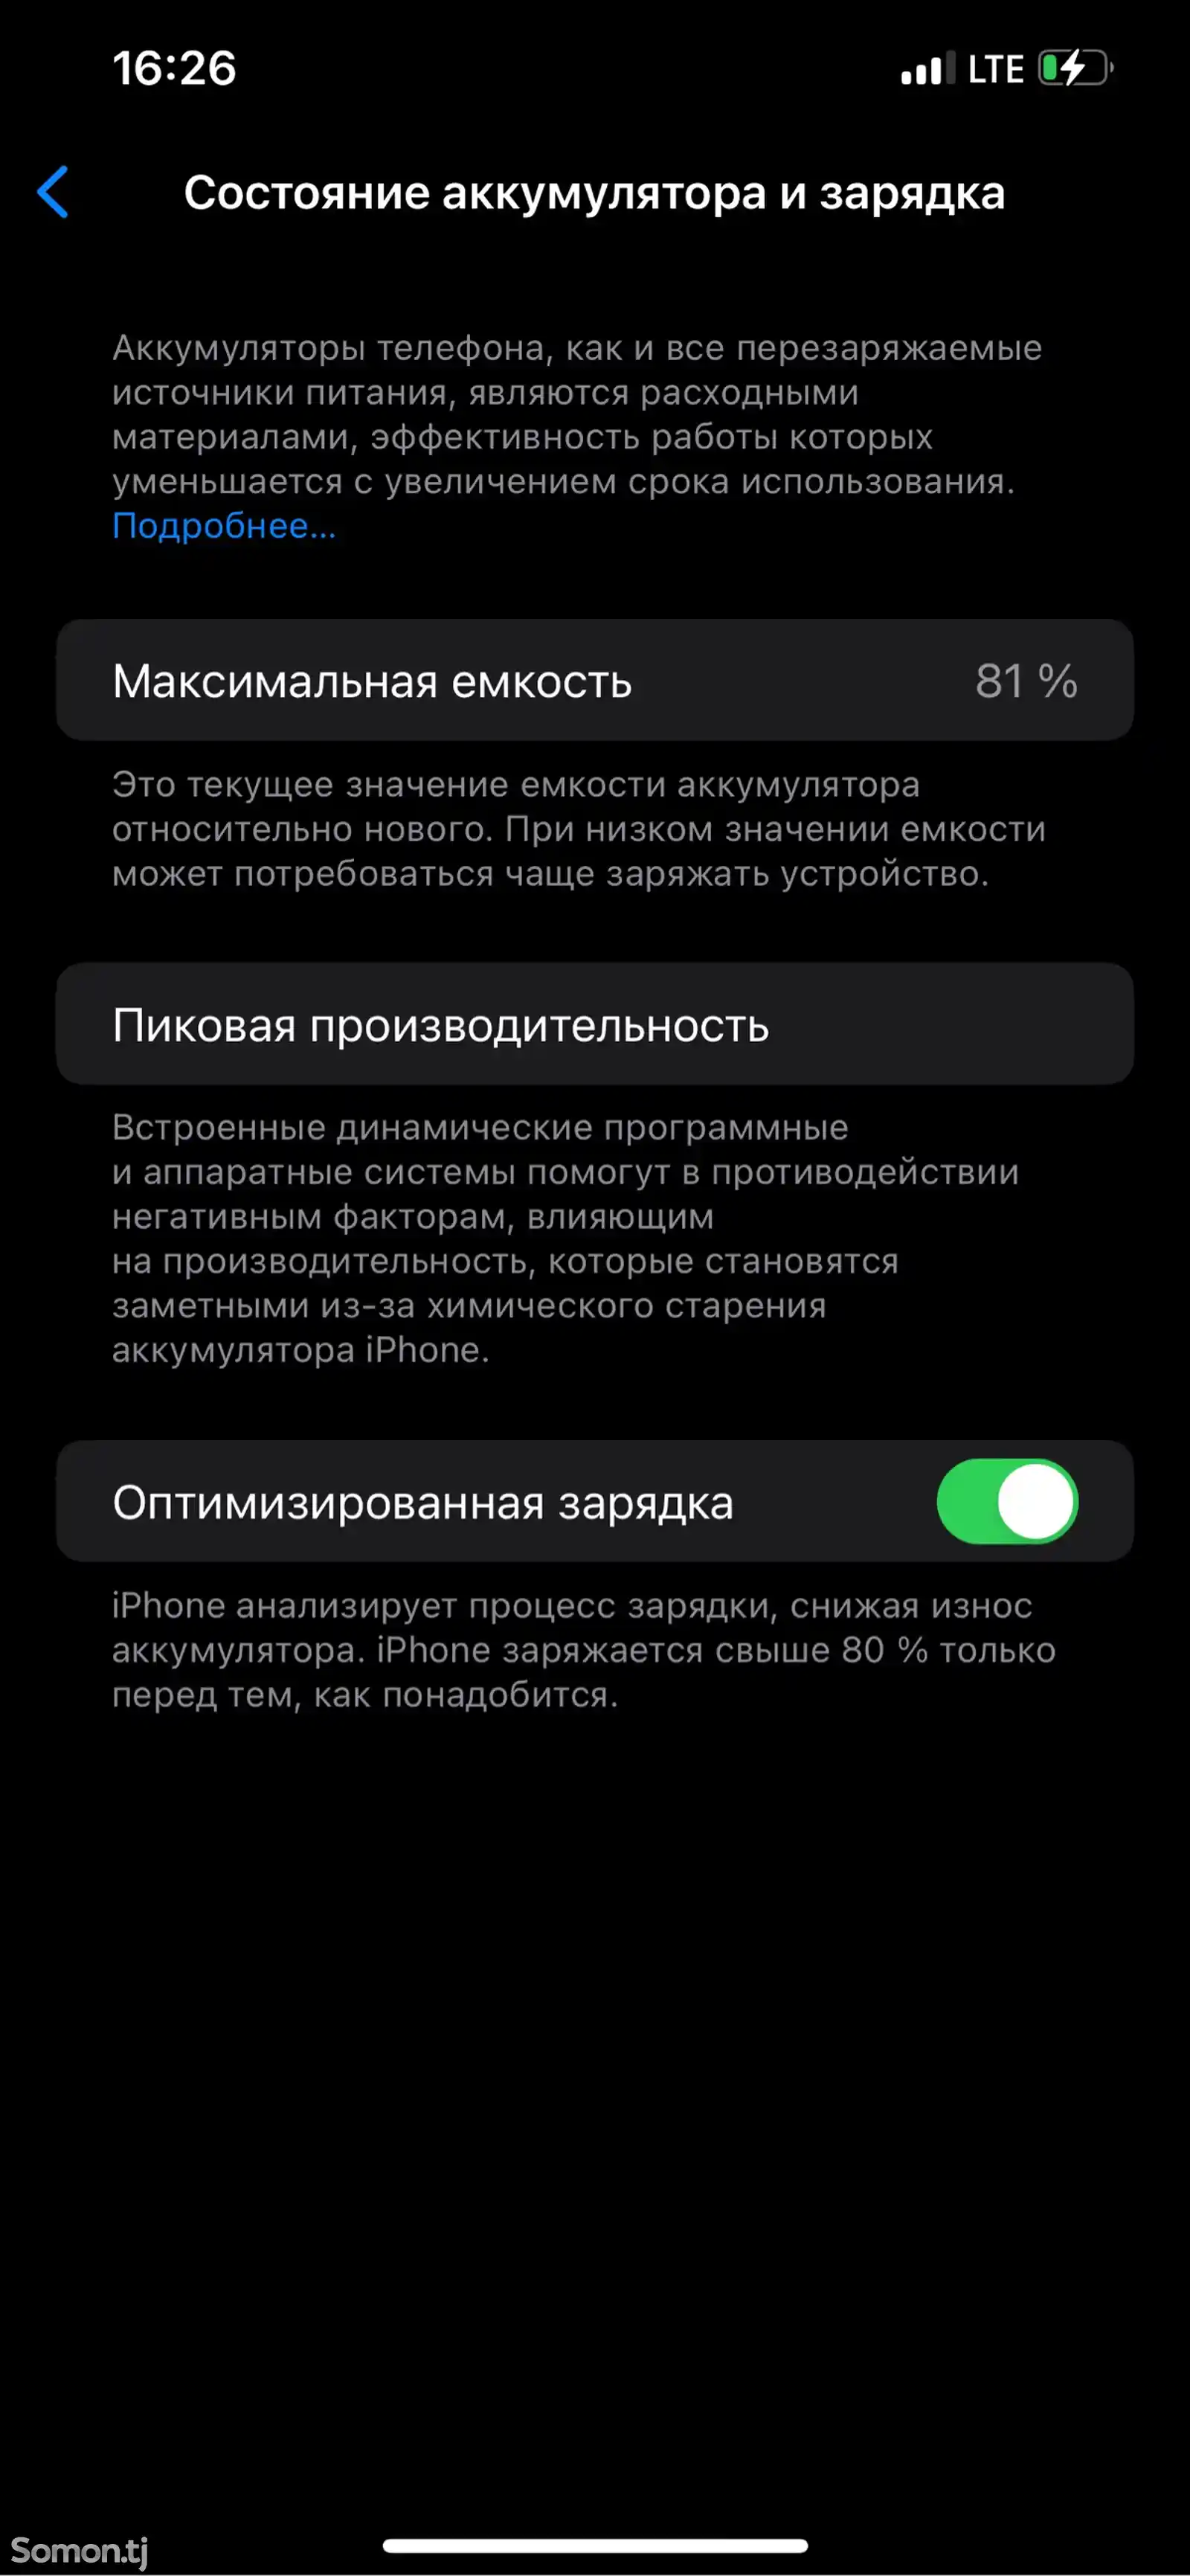 Apple iPhone 12 Pro Max, 256 gb, Gold-5